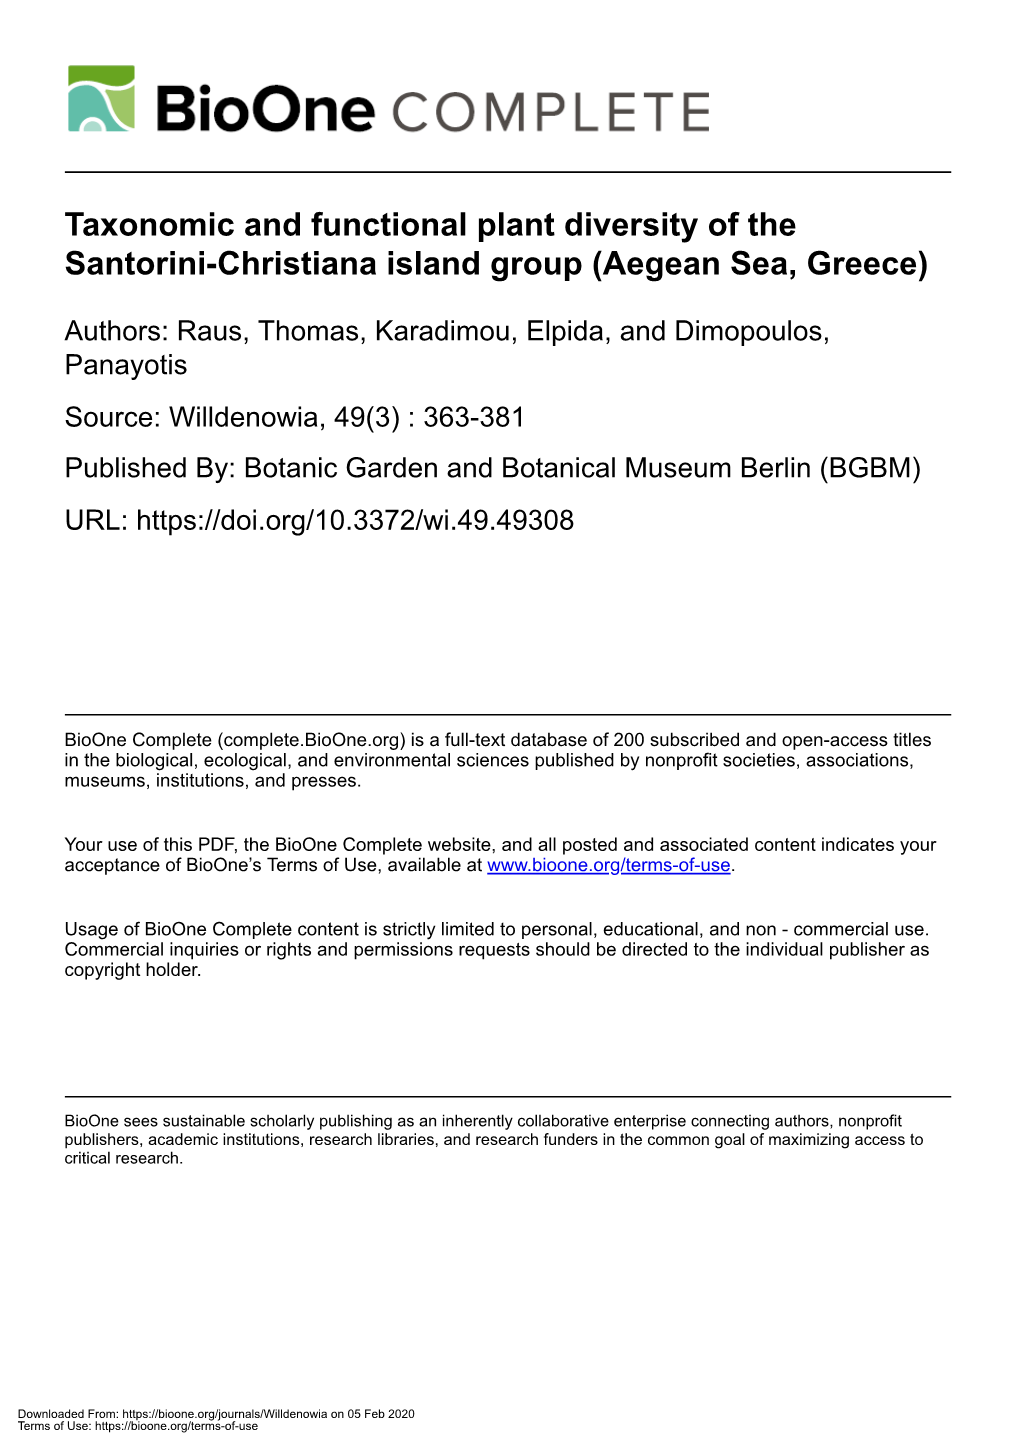 Taxonomic and Functional Plant Diversity of the Santorini-Christiana Island Group (Aegean Sea, Greece)